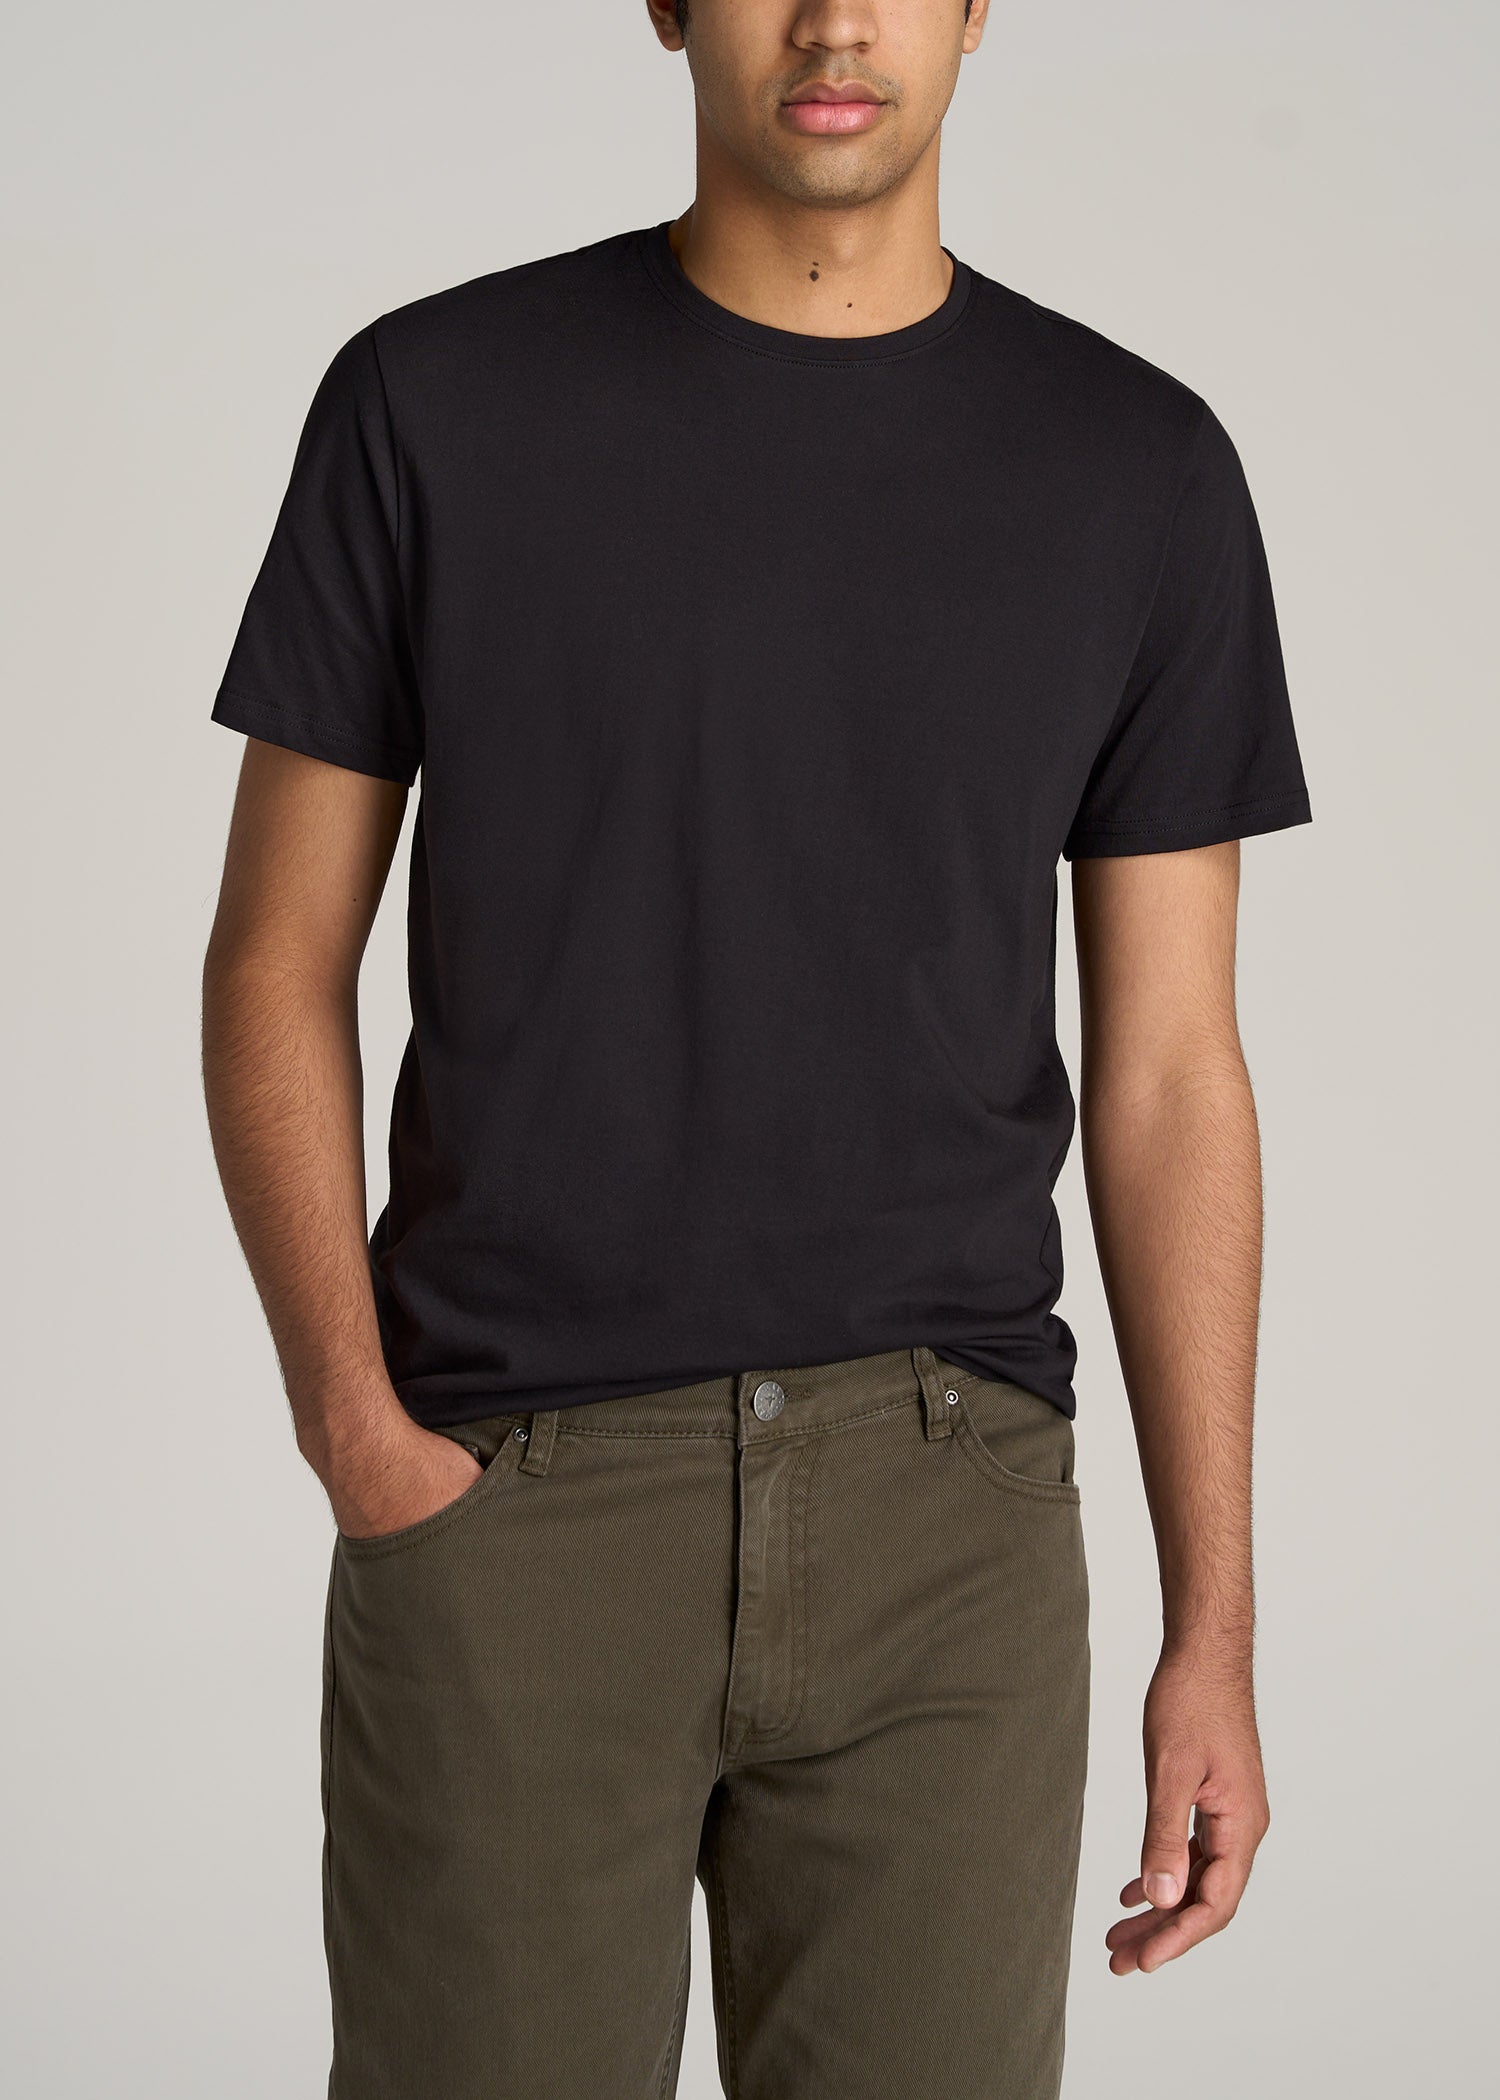 The Everyday REGULAR-FIT Crewneck Tall Men's T-Shirt in Black